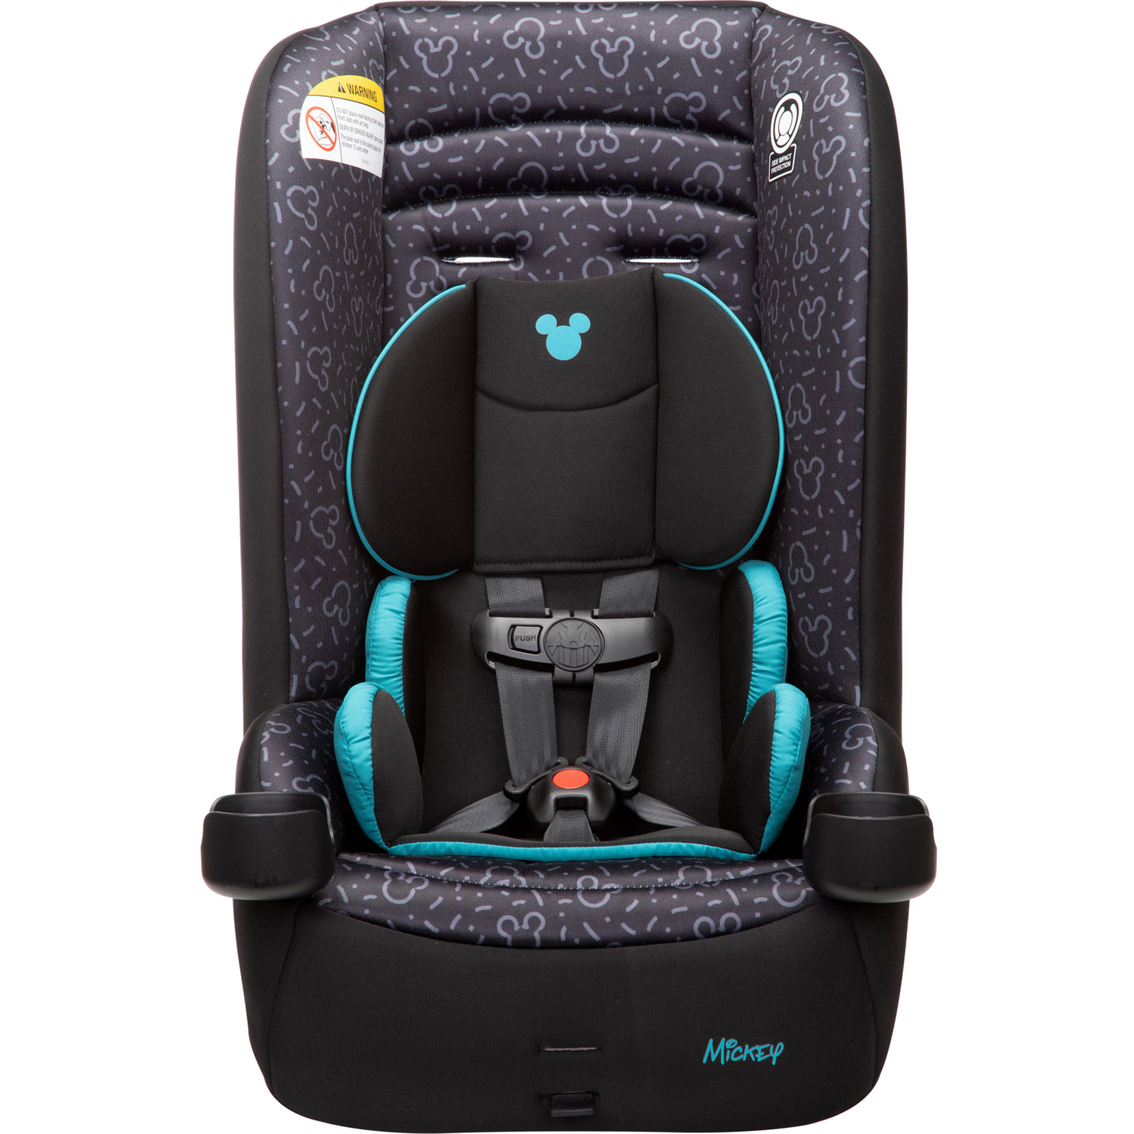 Disney Baby Jive 2 in 1 Convertible Car Seat - Image 3 of 10